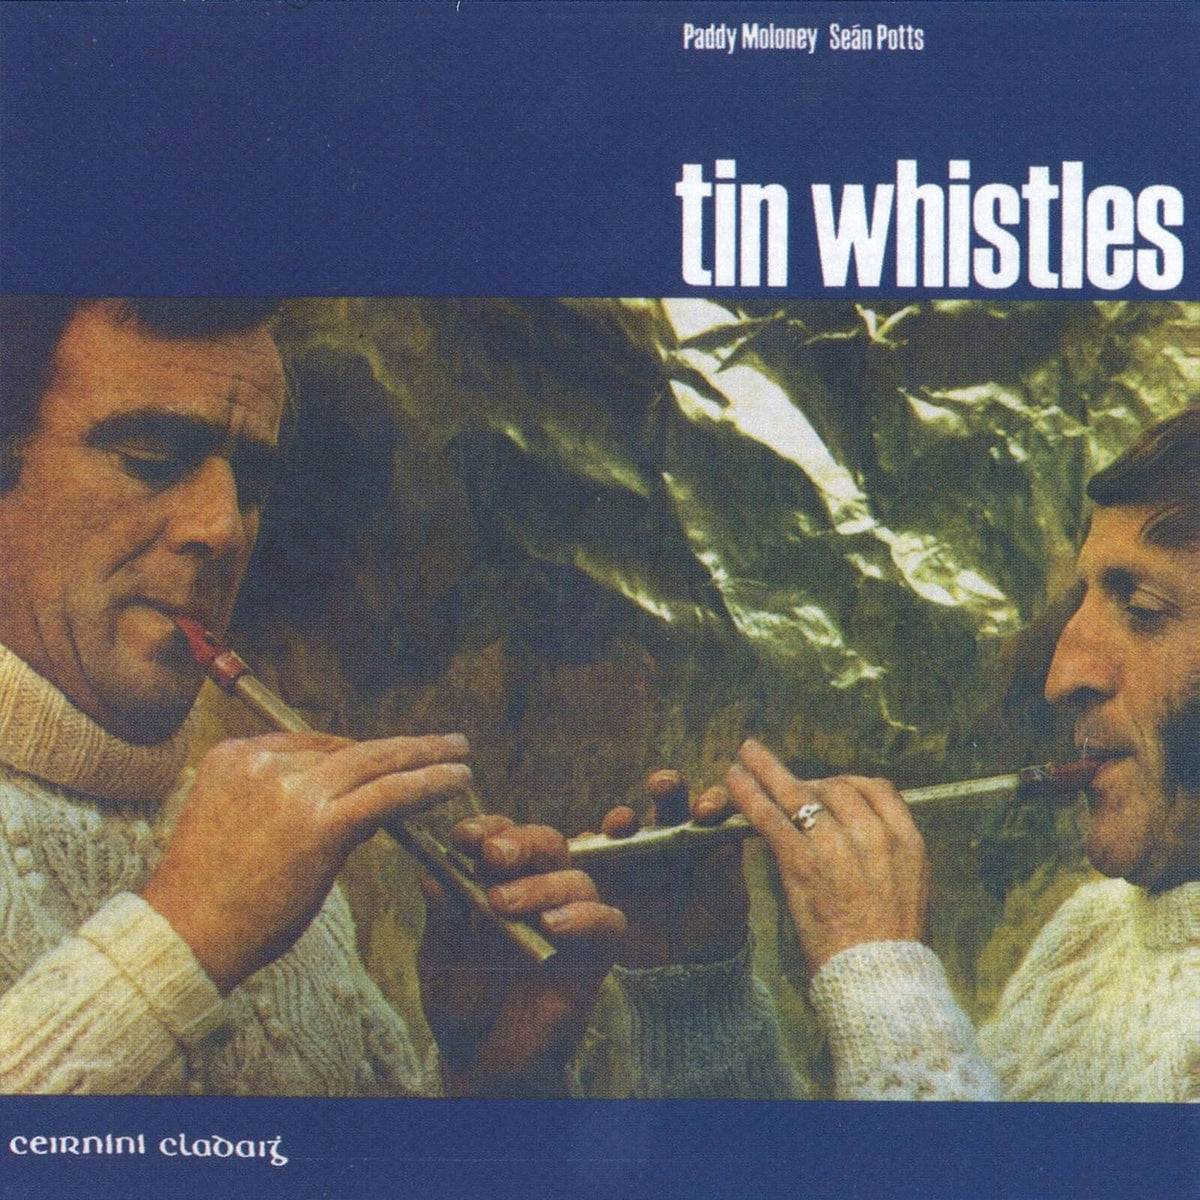 Paddy Moloney and Seán Potts : Tin Whistles